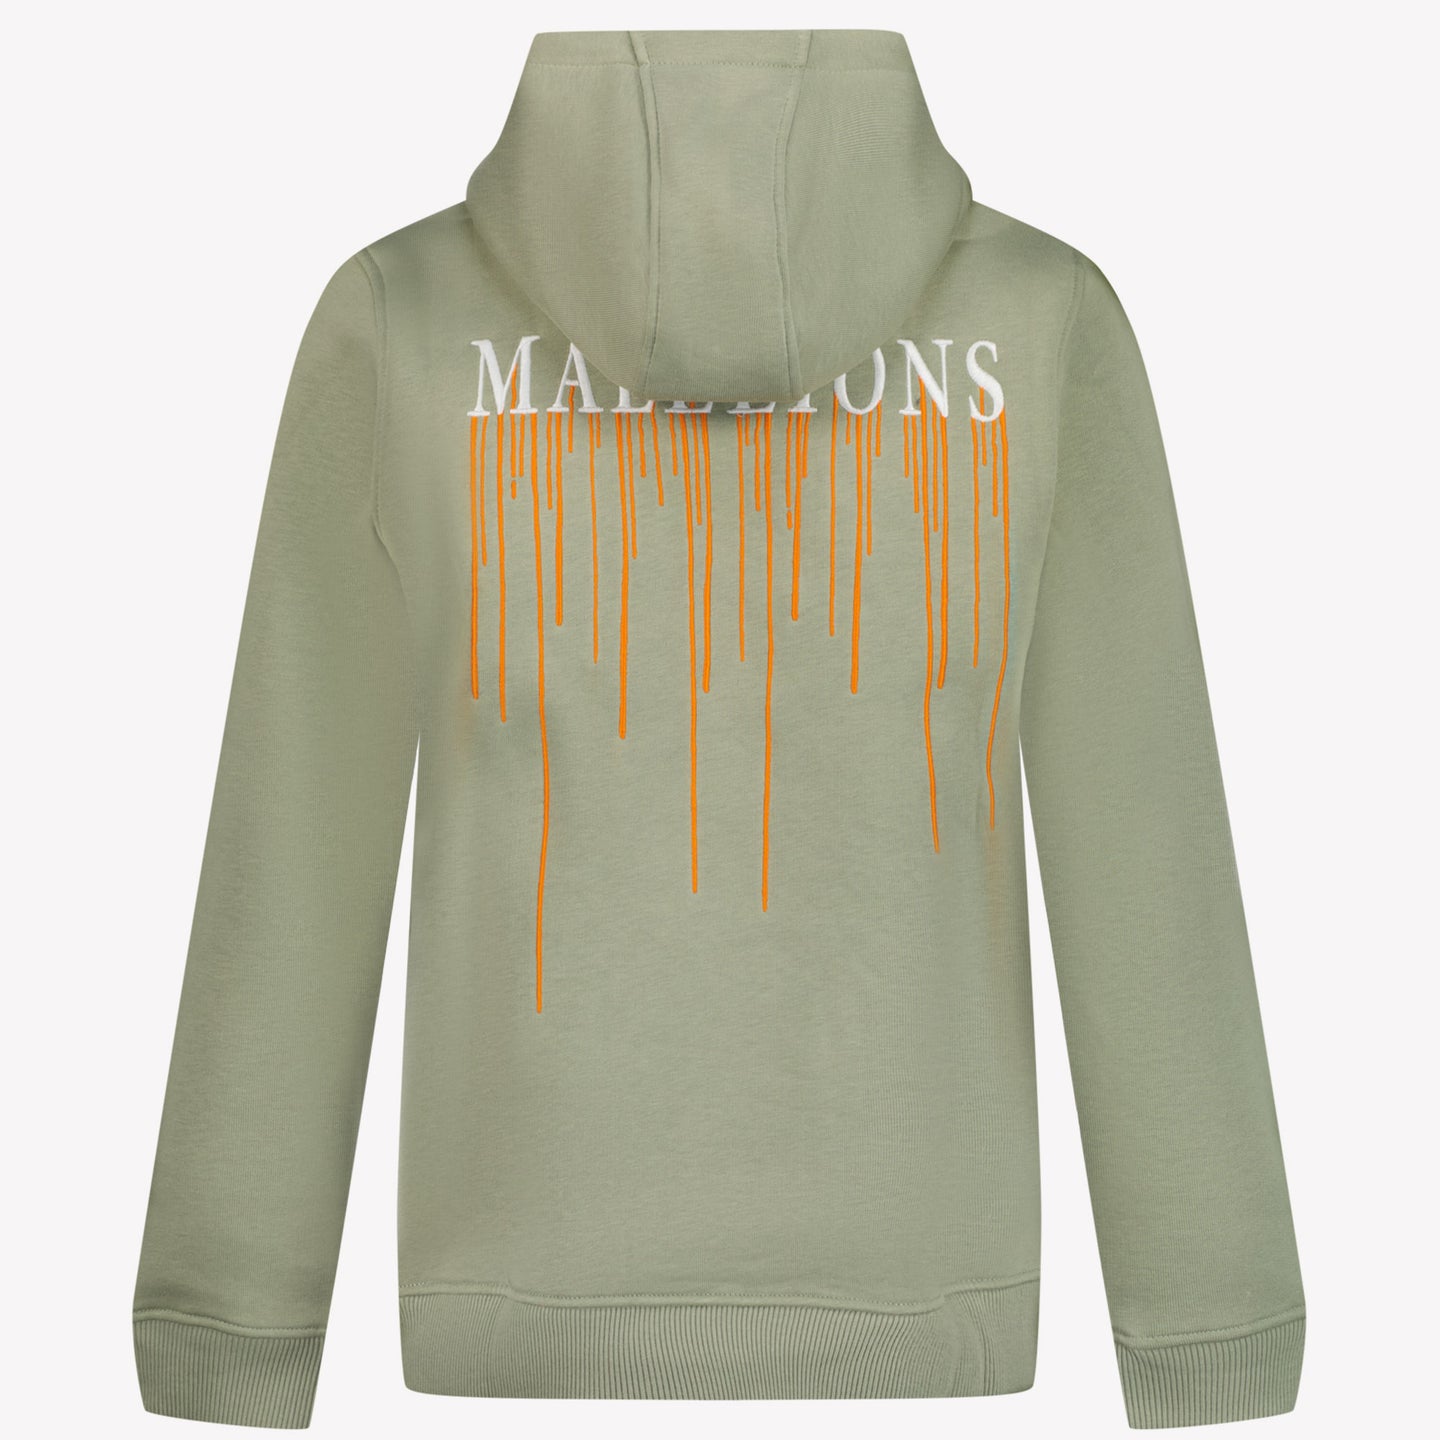 Malelions unisex sweater Army